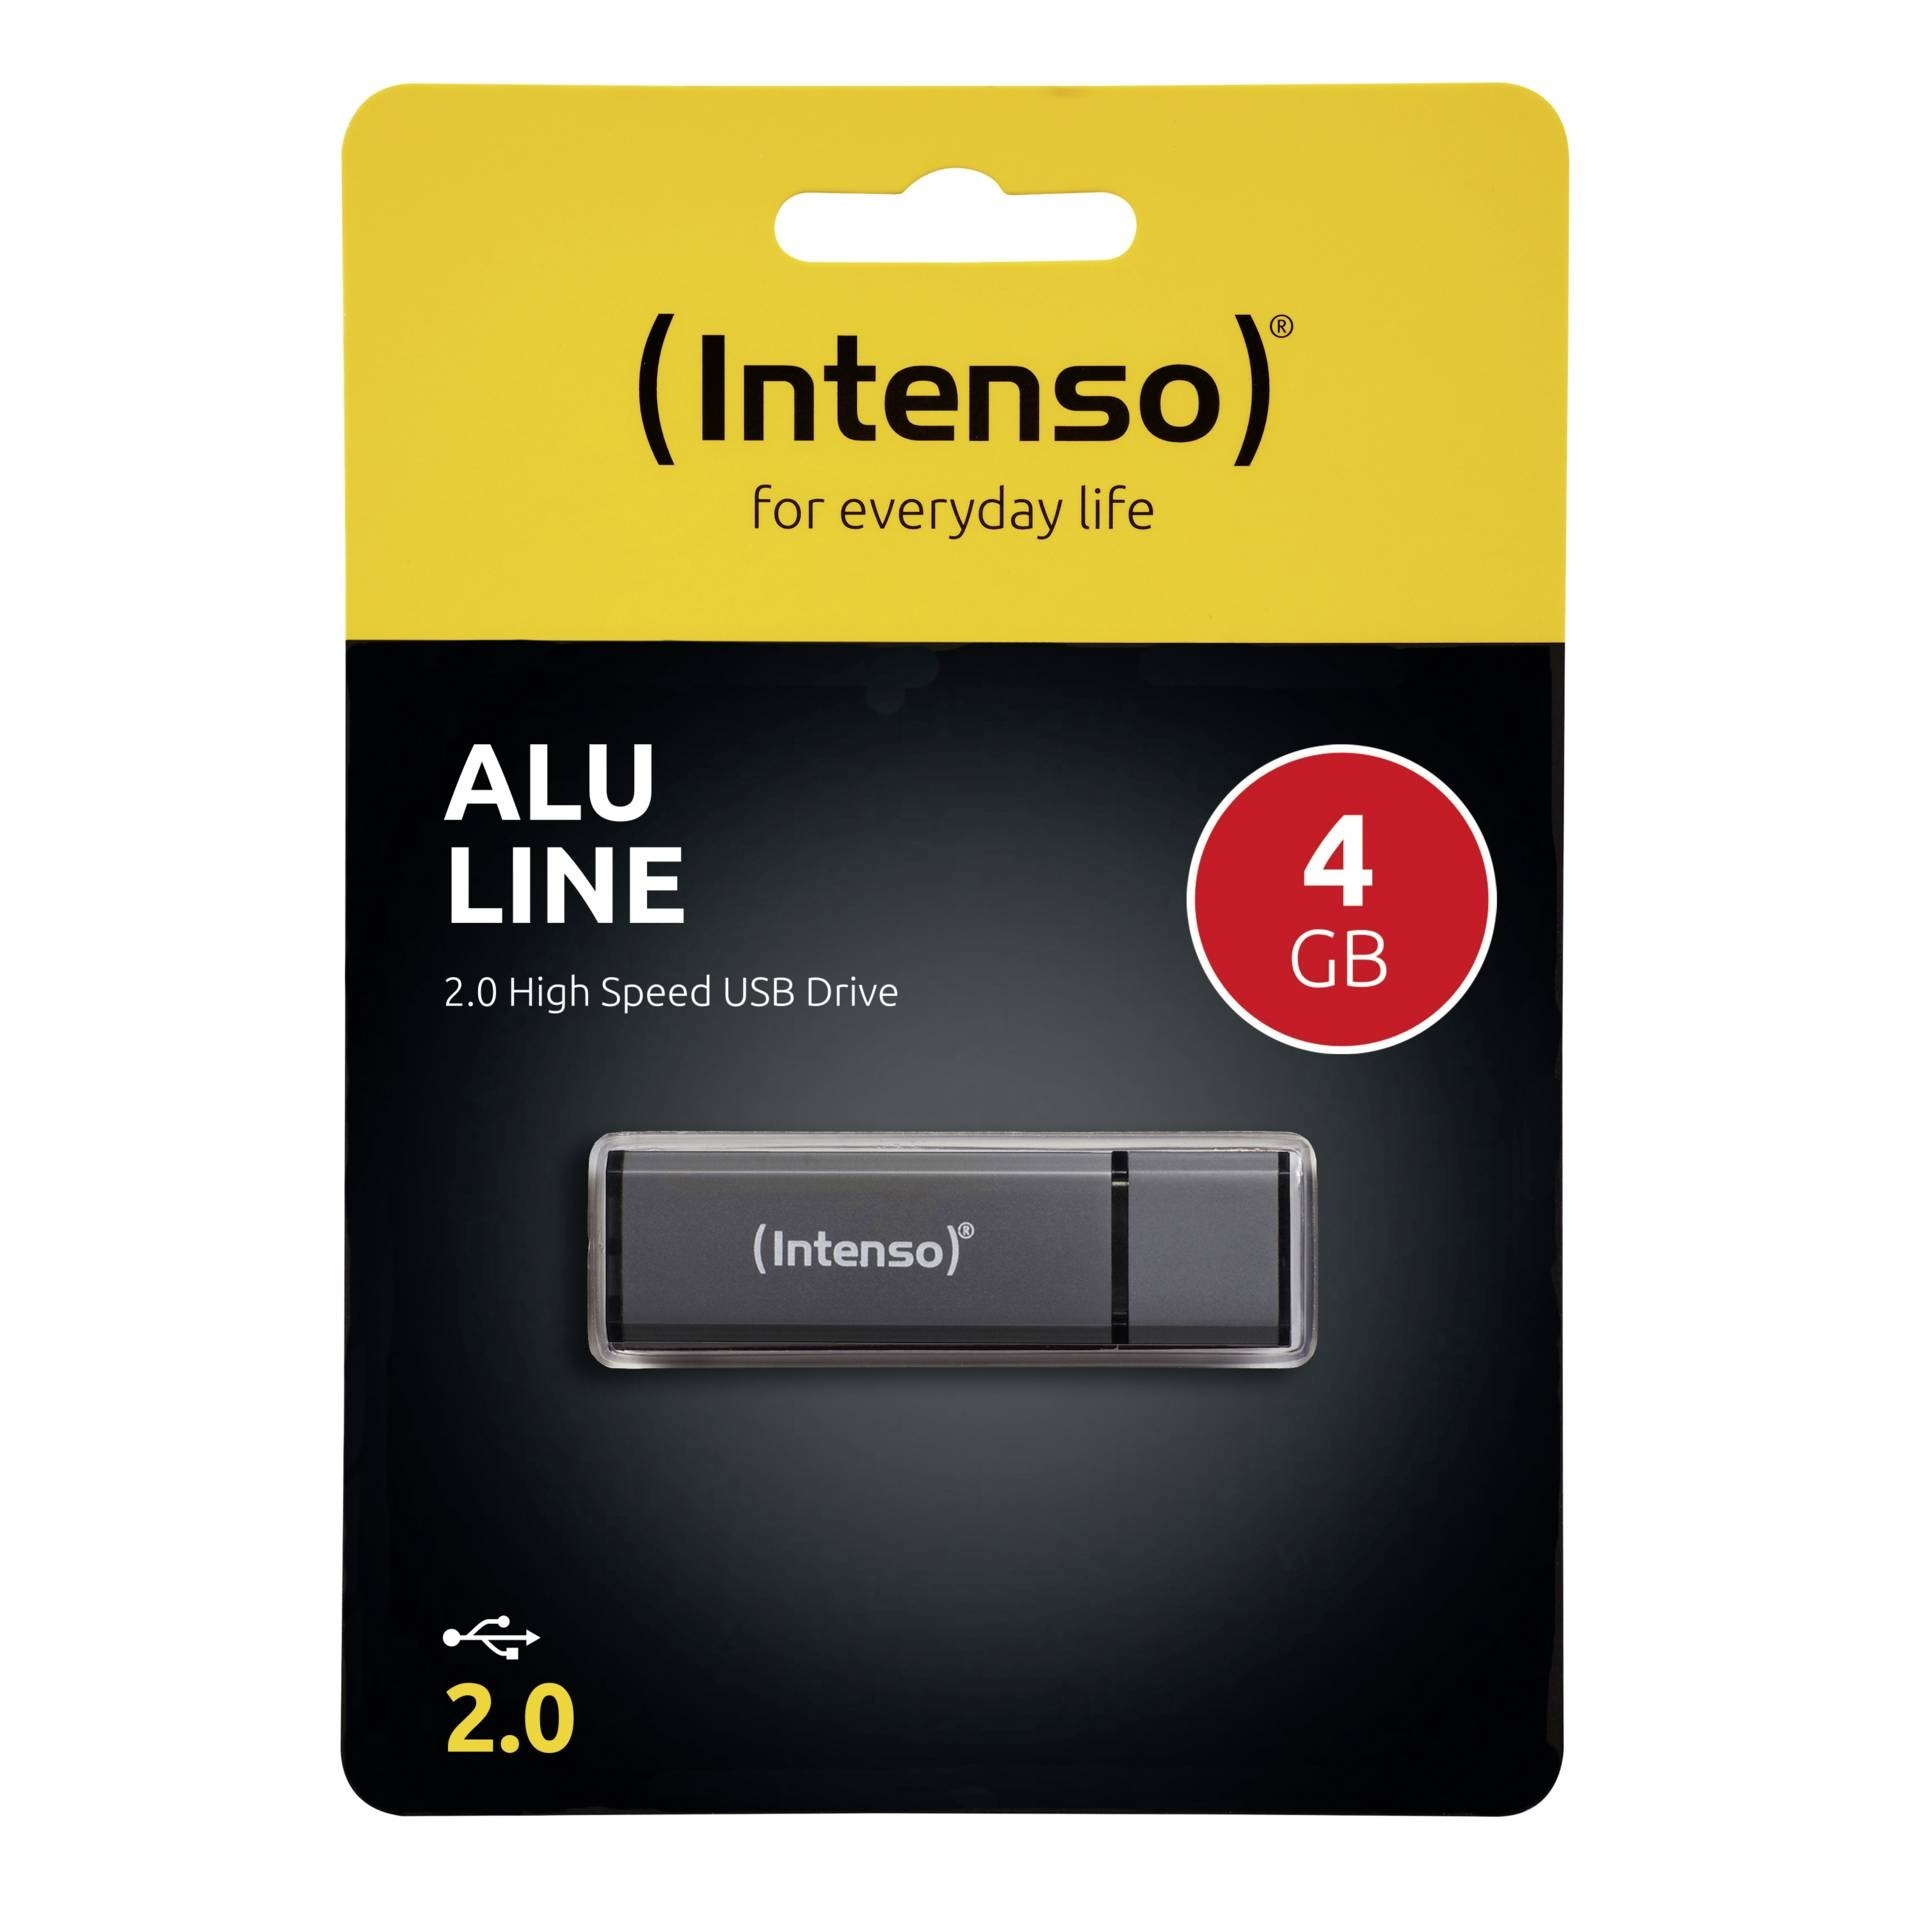 Intenso 5x USB-Stick 4GB Intenso 2.0 ALU Line anthrazit 